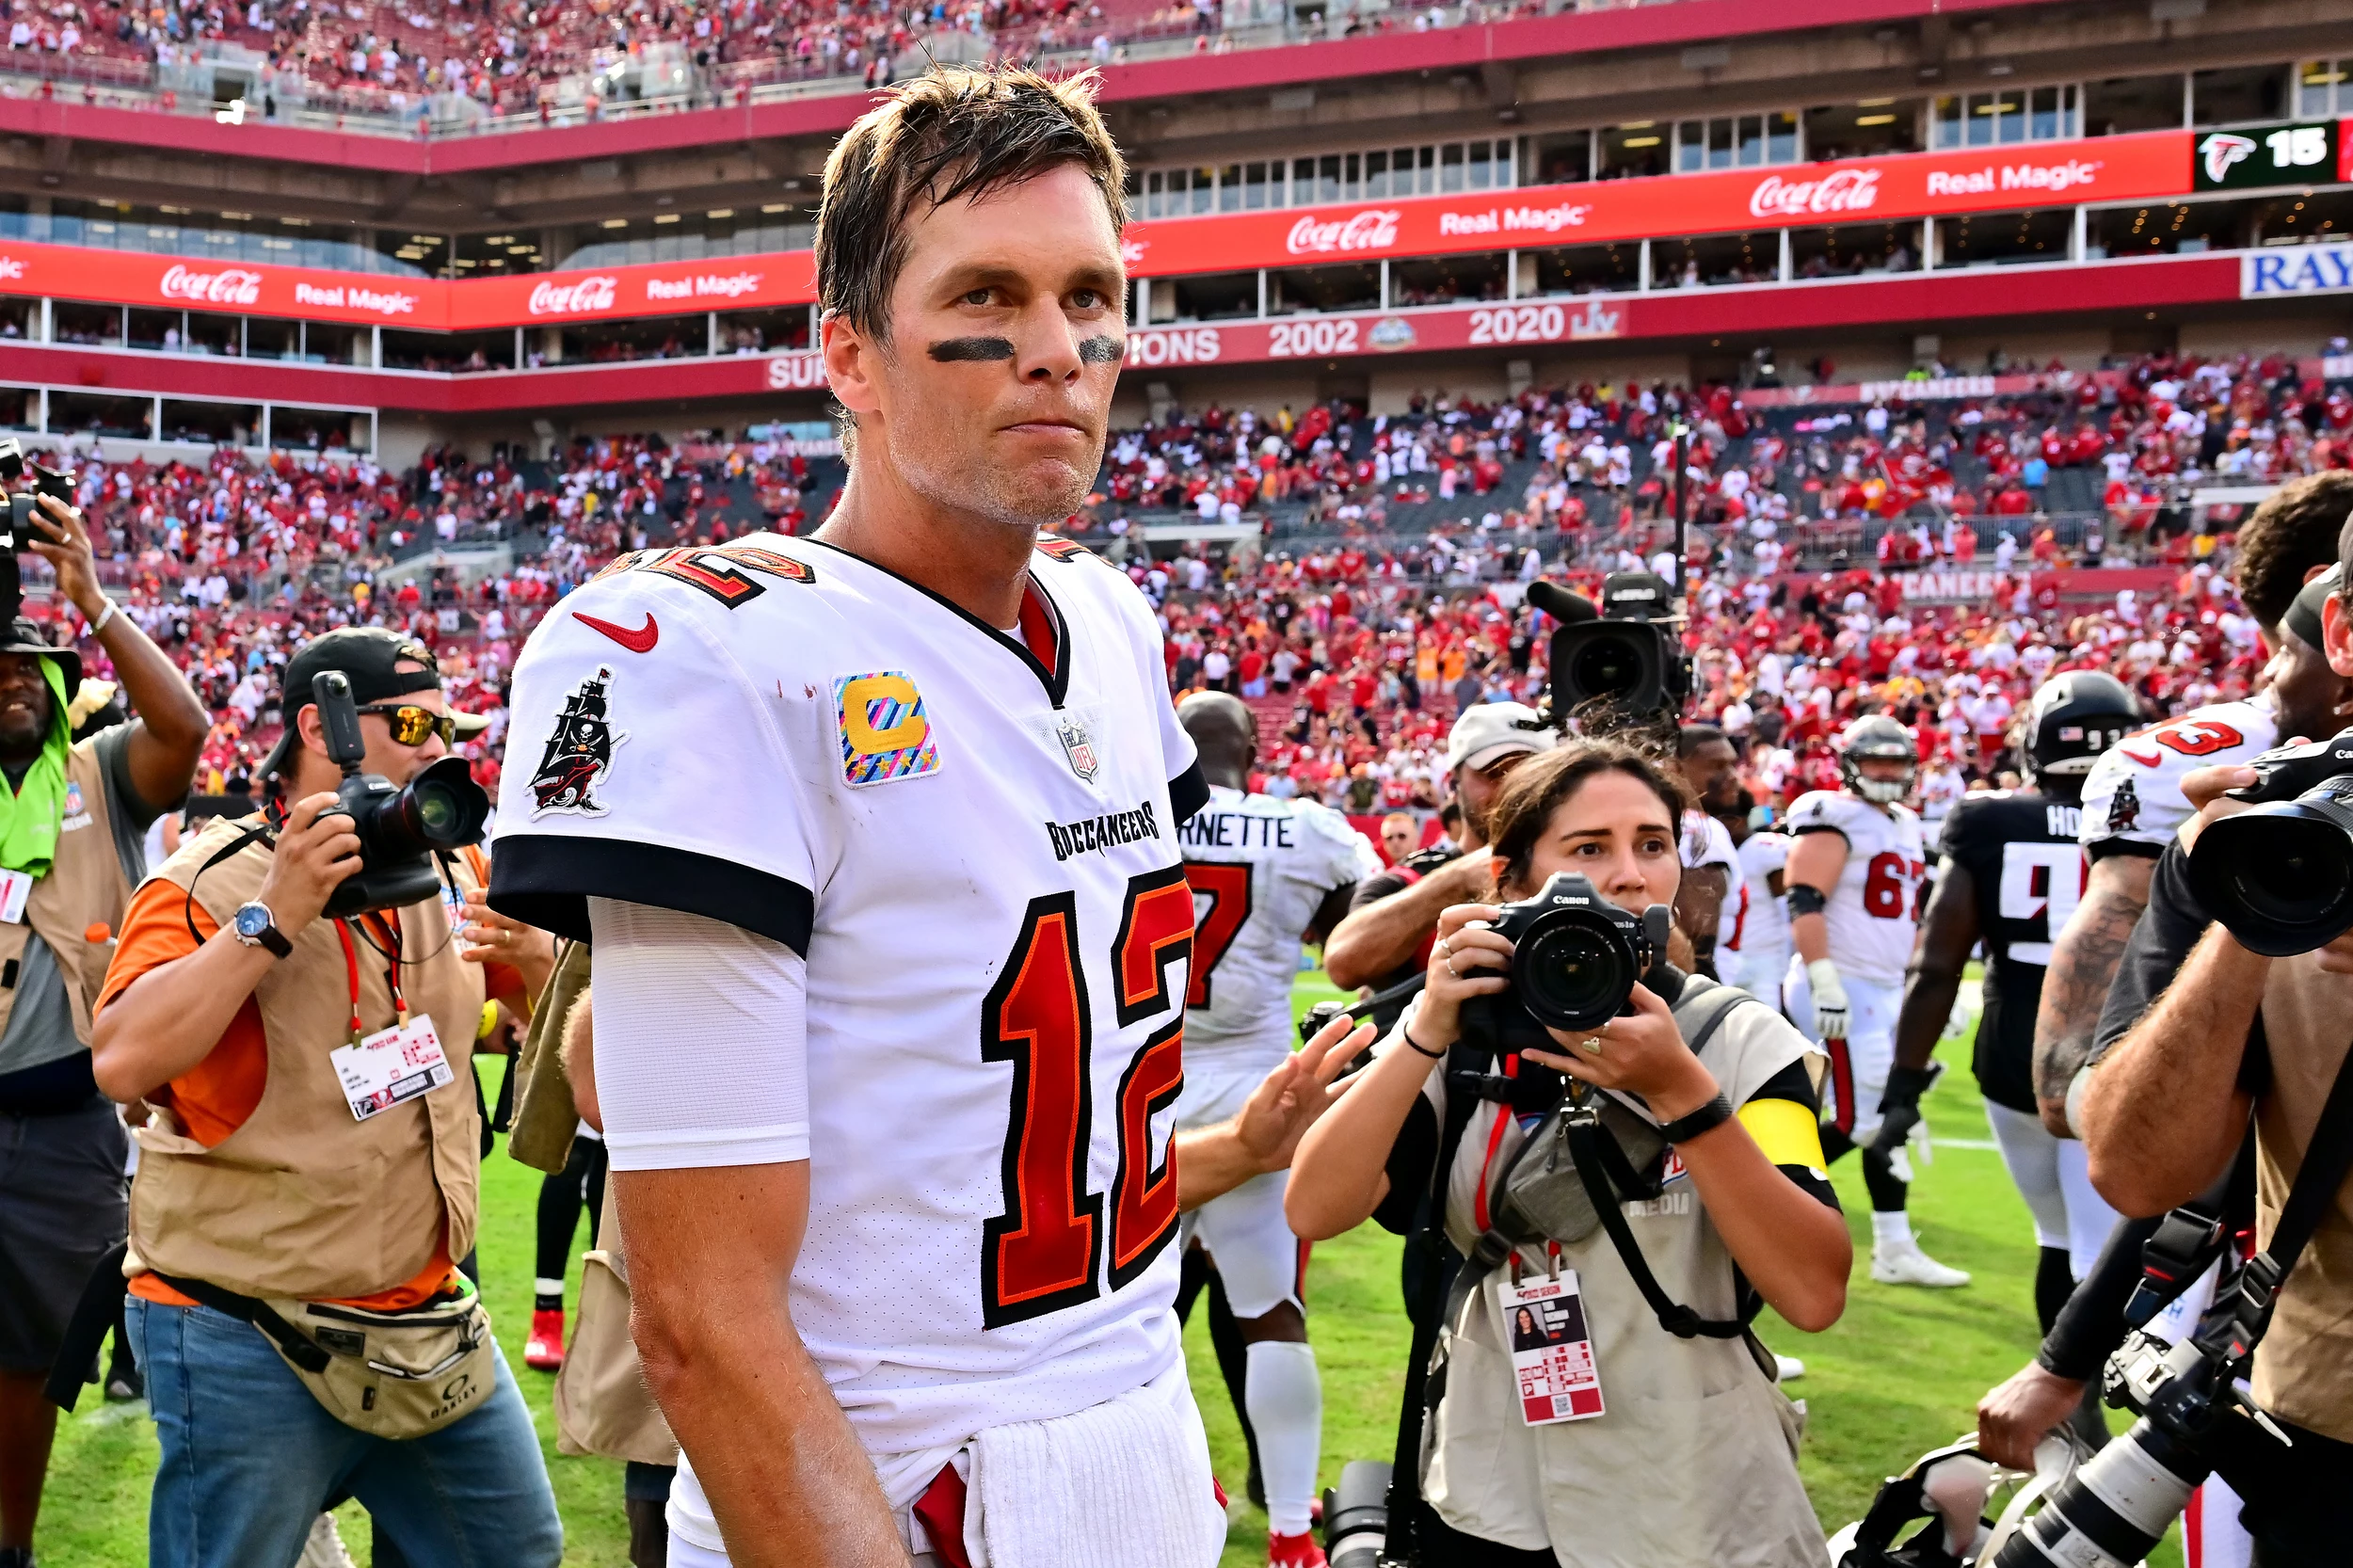 Tom Brady talks balancing personal life, football amid Buccaneers struggles